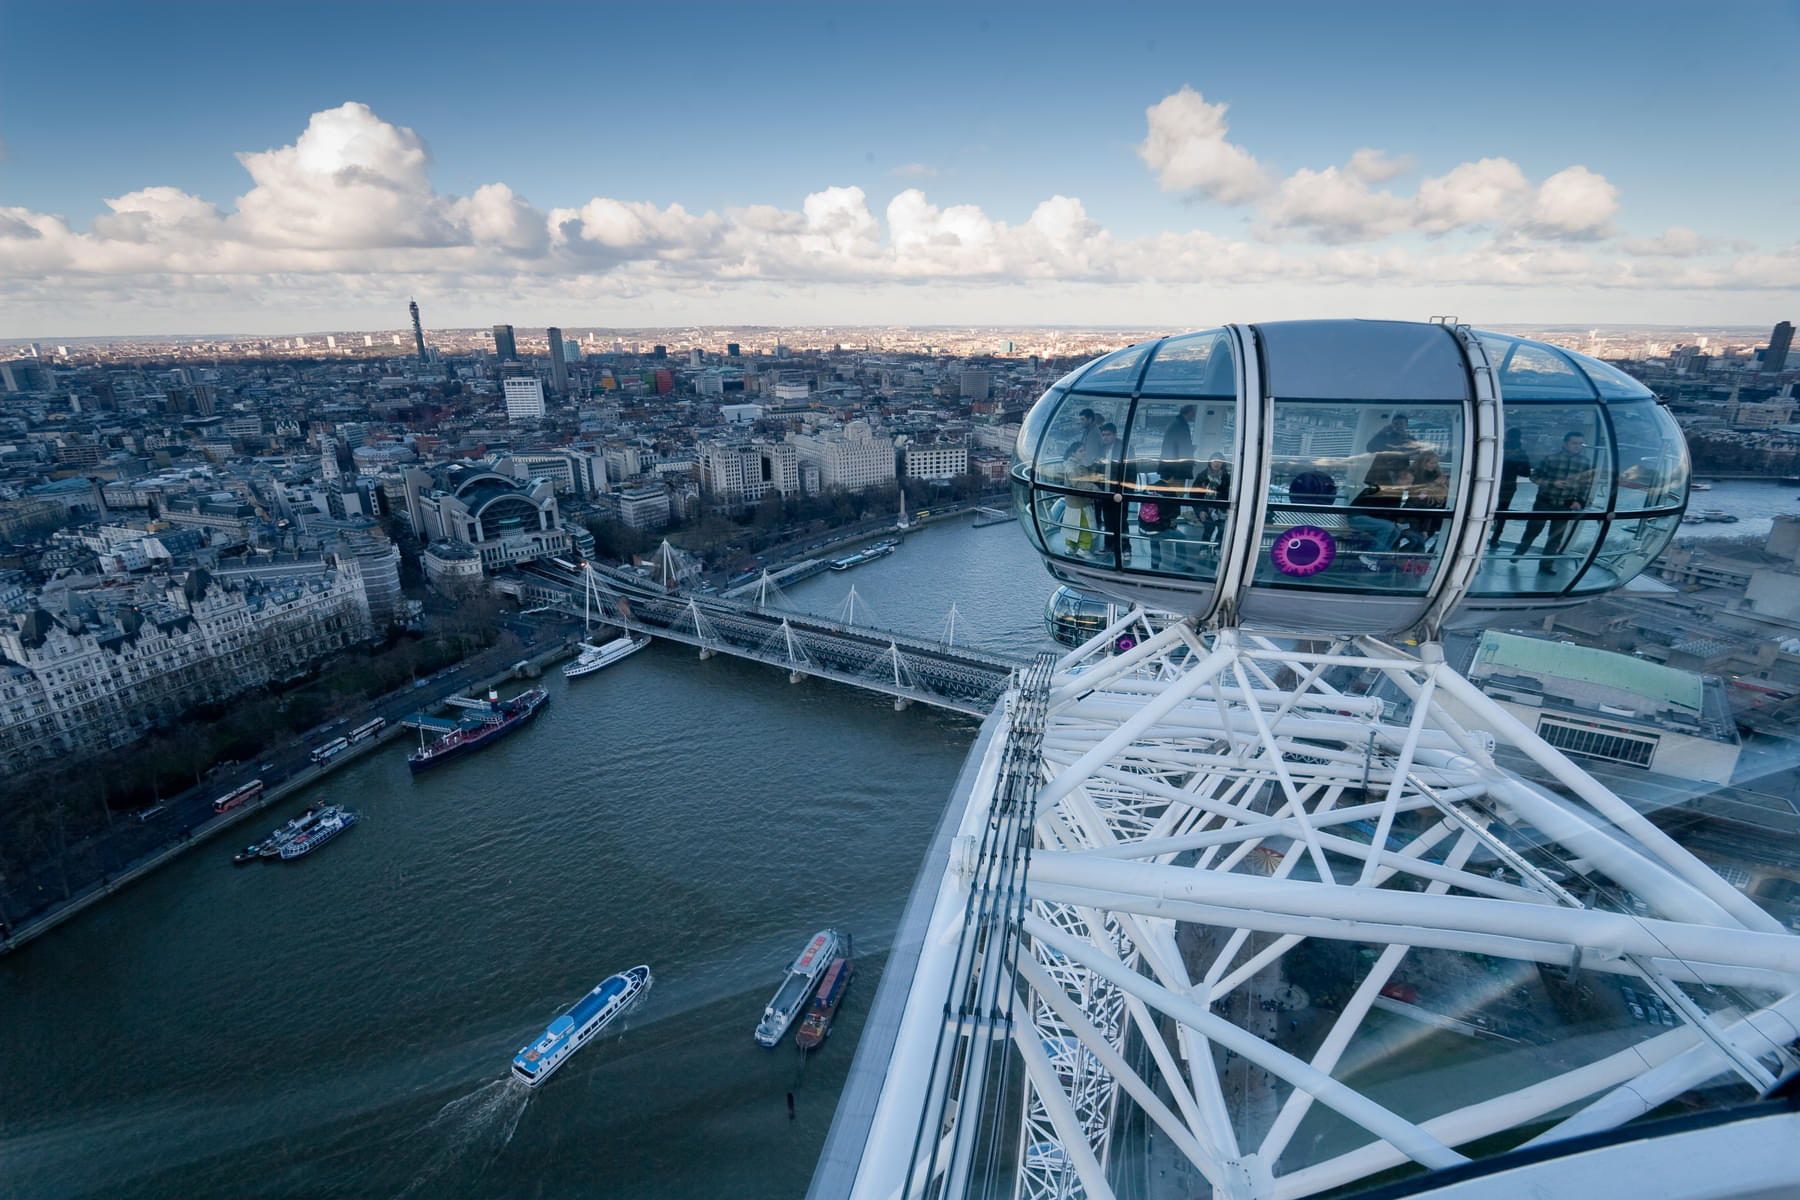 Royal Capsule of the London Eye